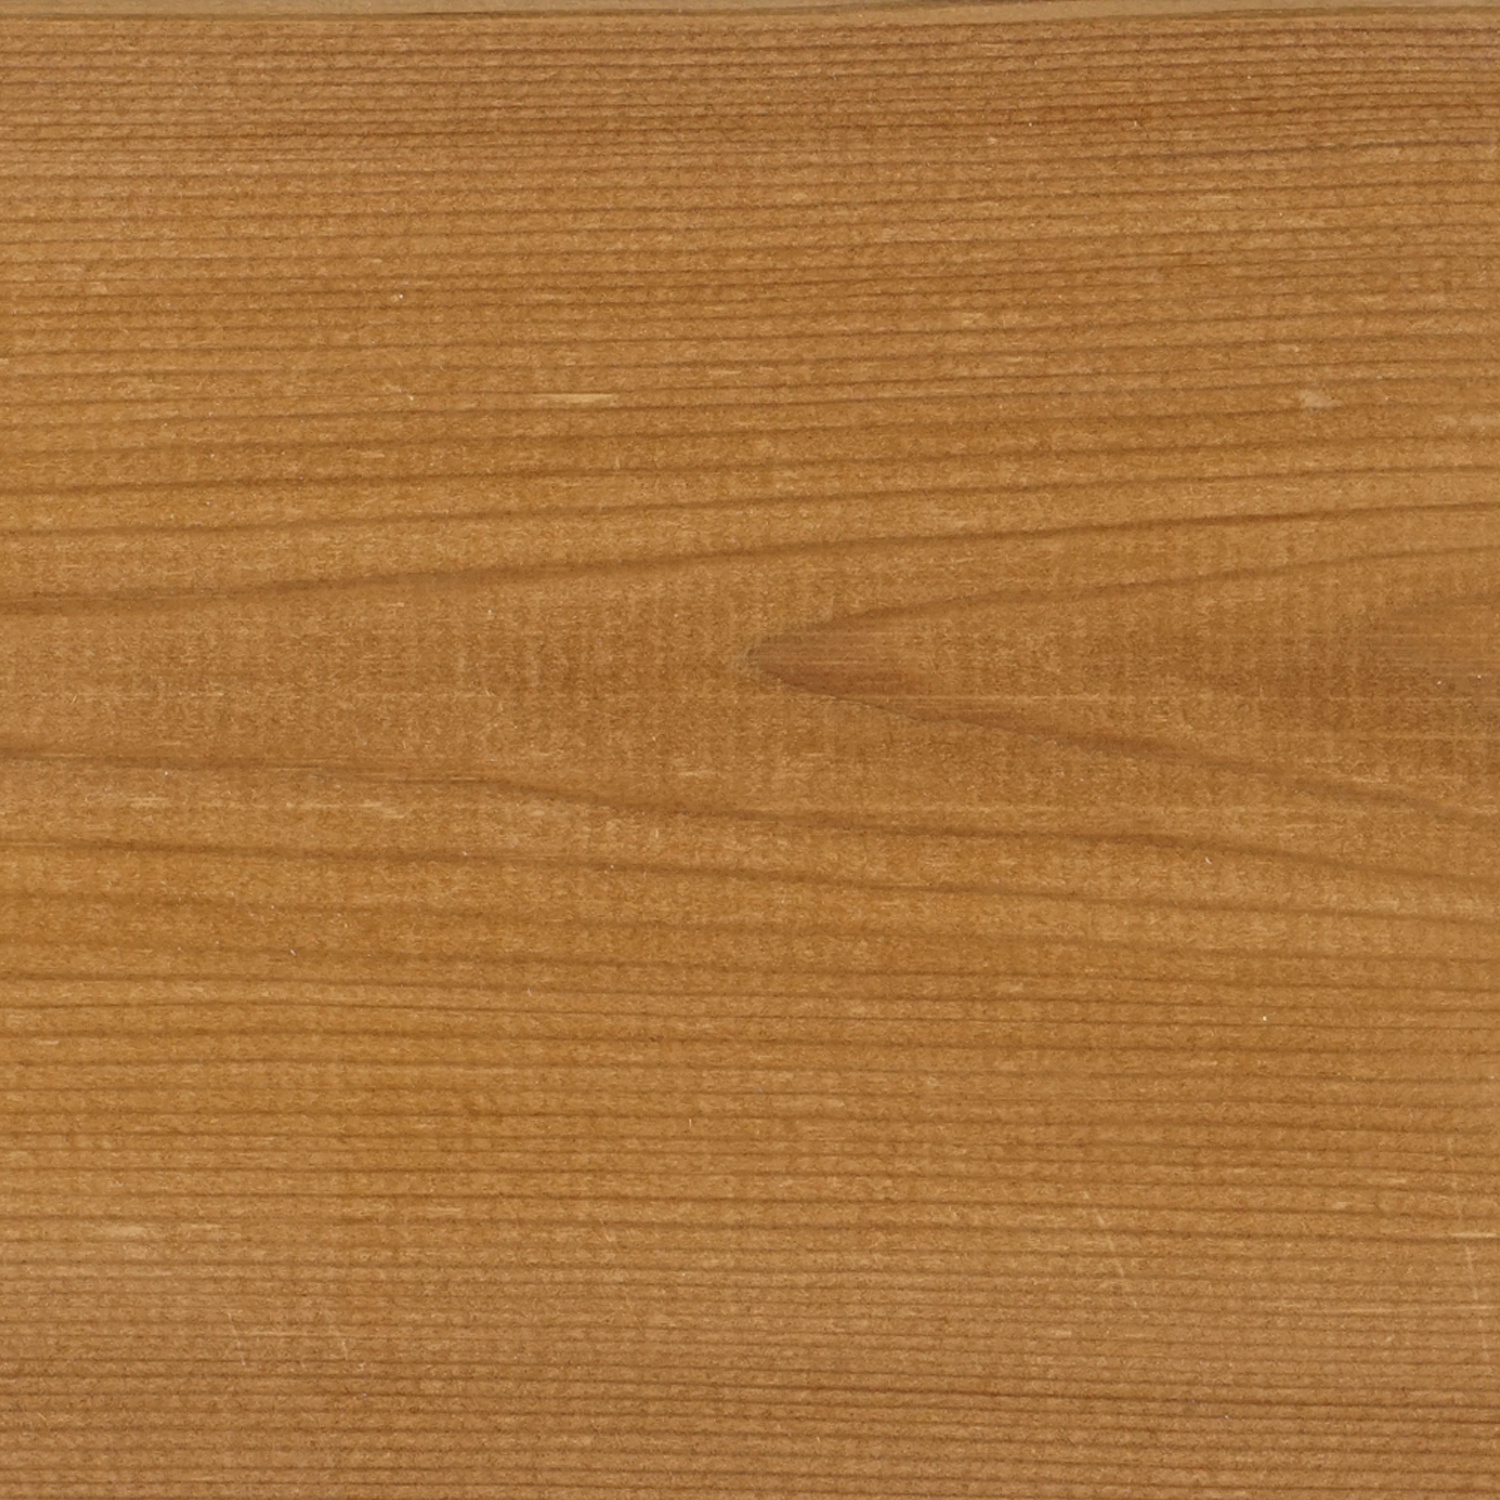  Thermowood Grenen channelsiding rabat 21x175mm - geschaafd - kunstmatig gedroogd (kd 8-12%) - thermisch gemodificeerd Grenen hout (thermohout)